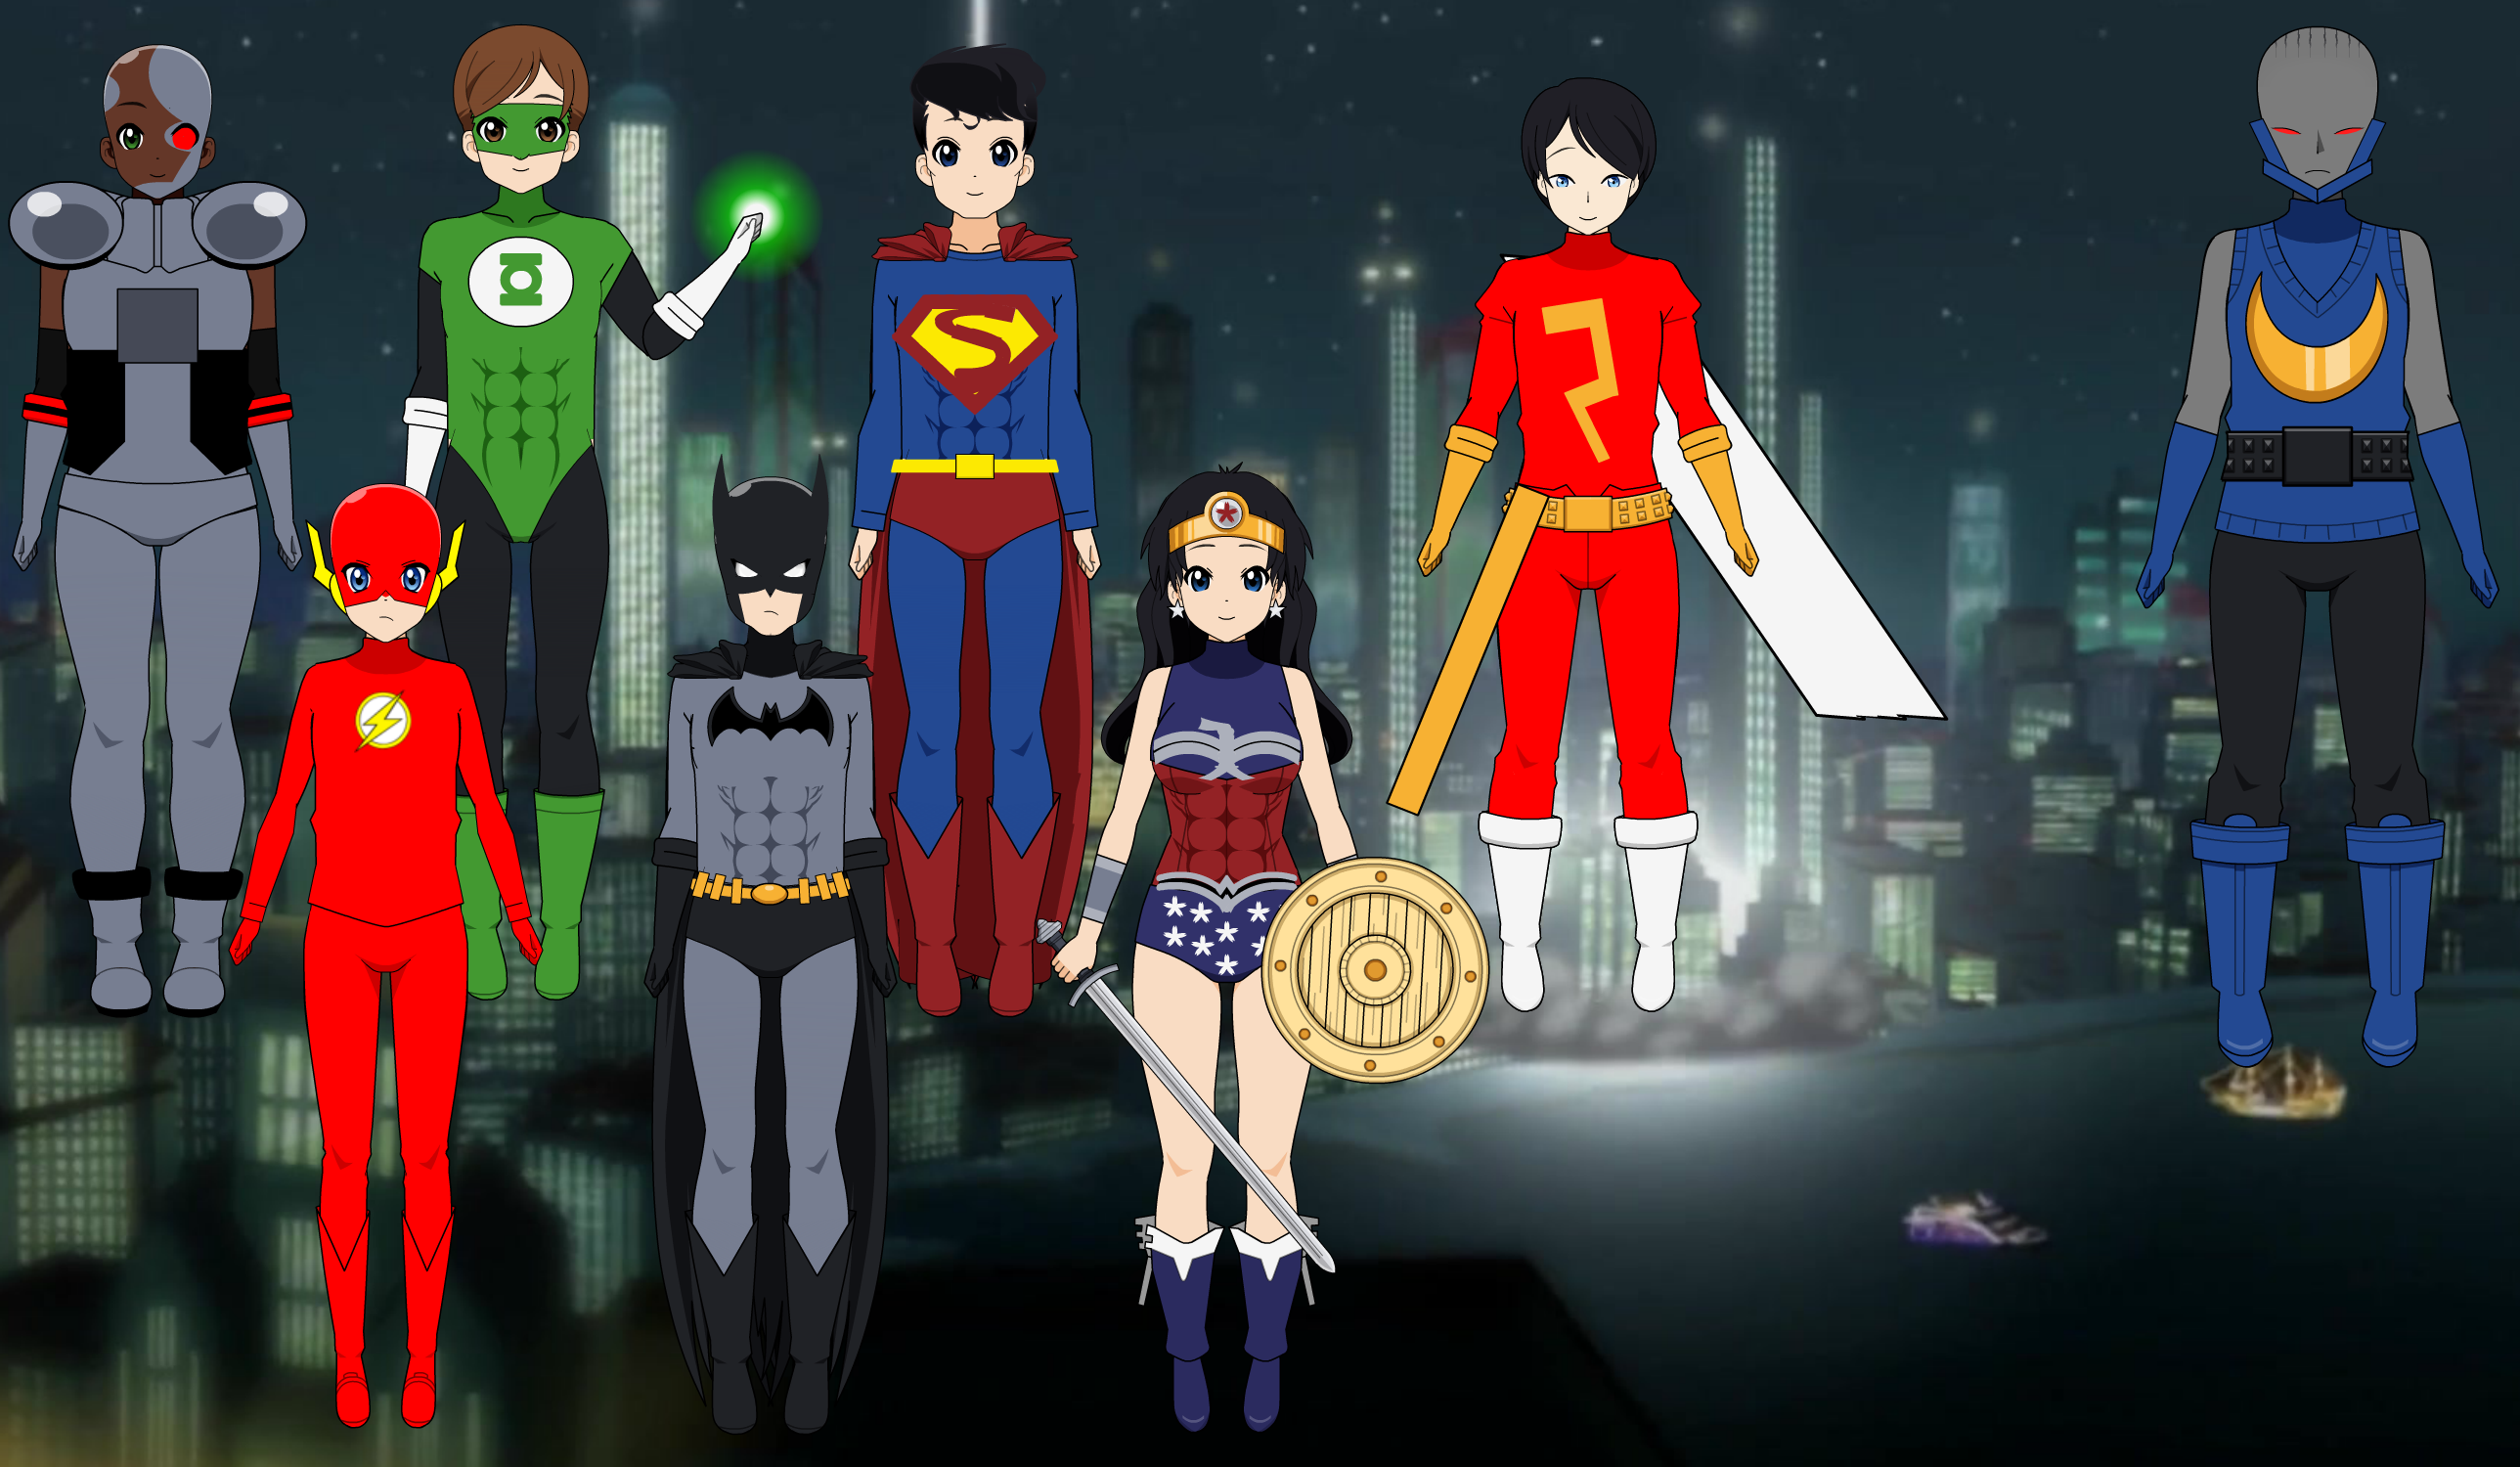 Justice league (Gacha club version) by haikaltv on DeviantArt